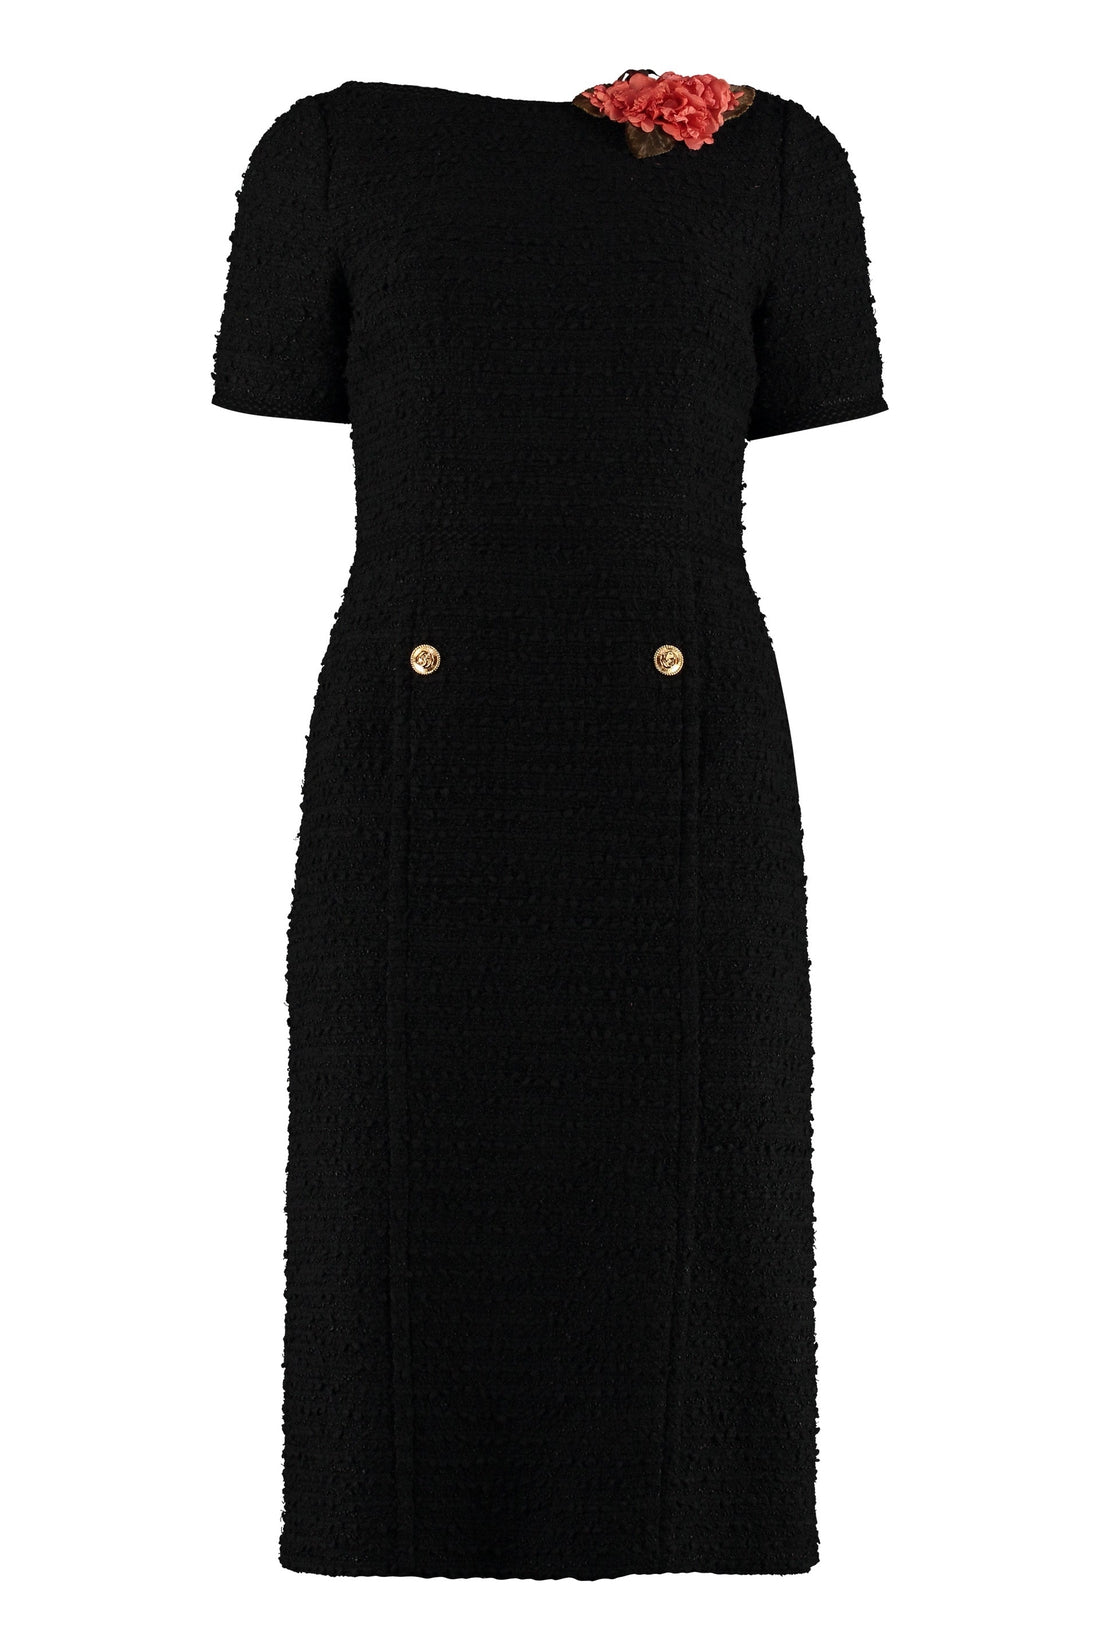 Gucci-OUTLET-SALE-Tweed sheath dress-ARCHIVIST